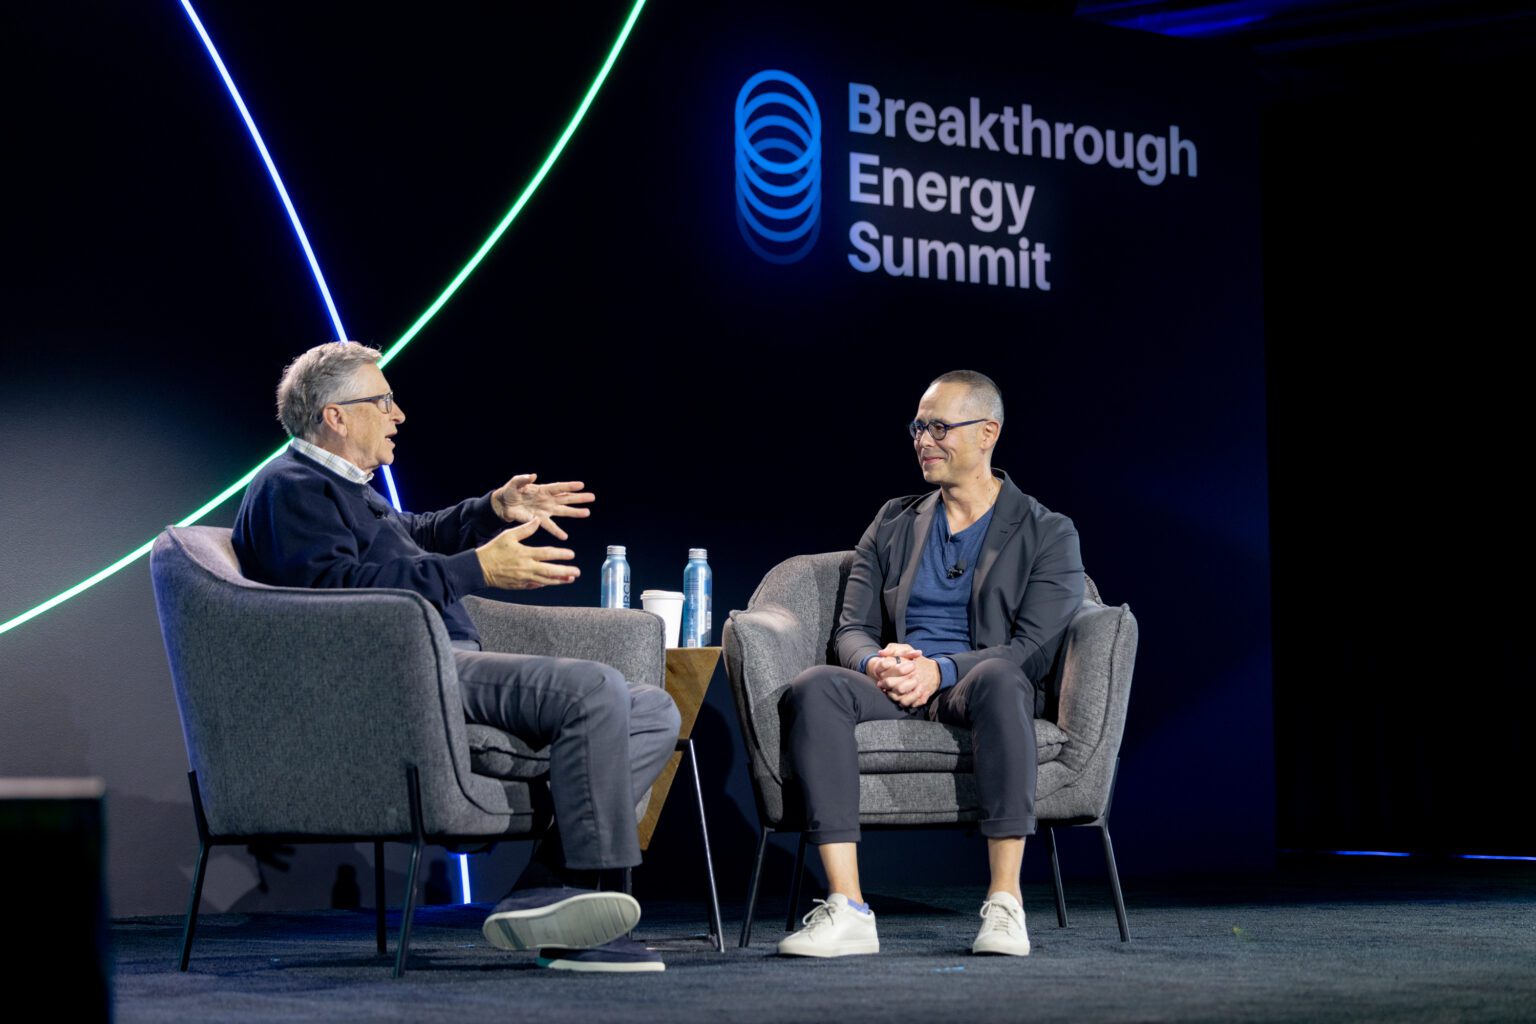 Breakthrough Energy Summit 2022 Transforming Tomorrow Together